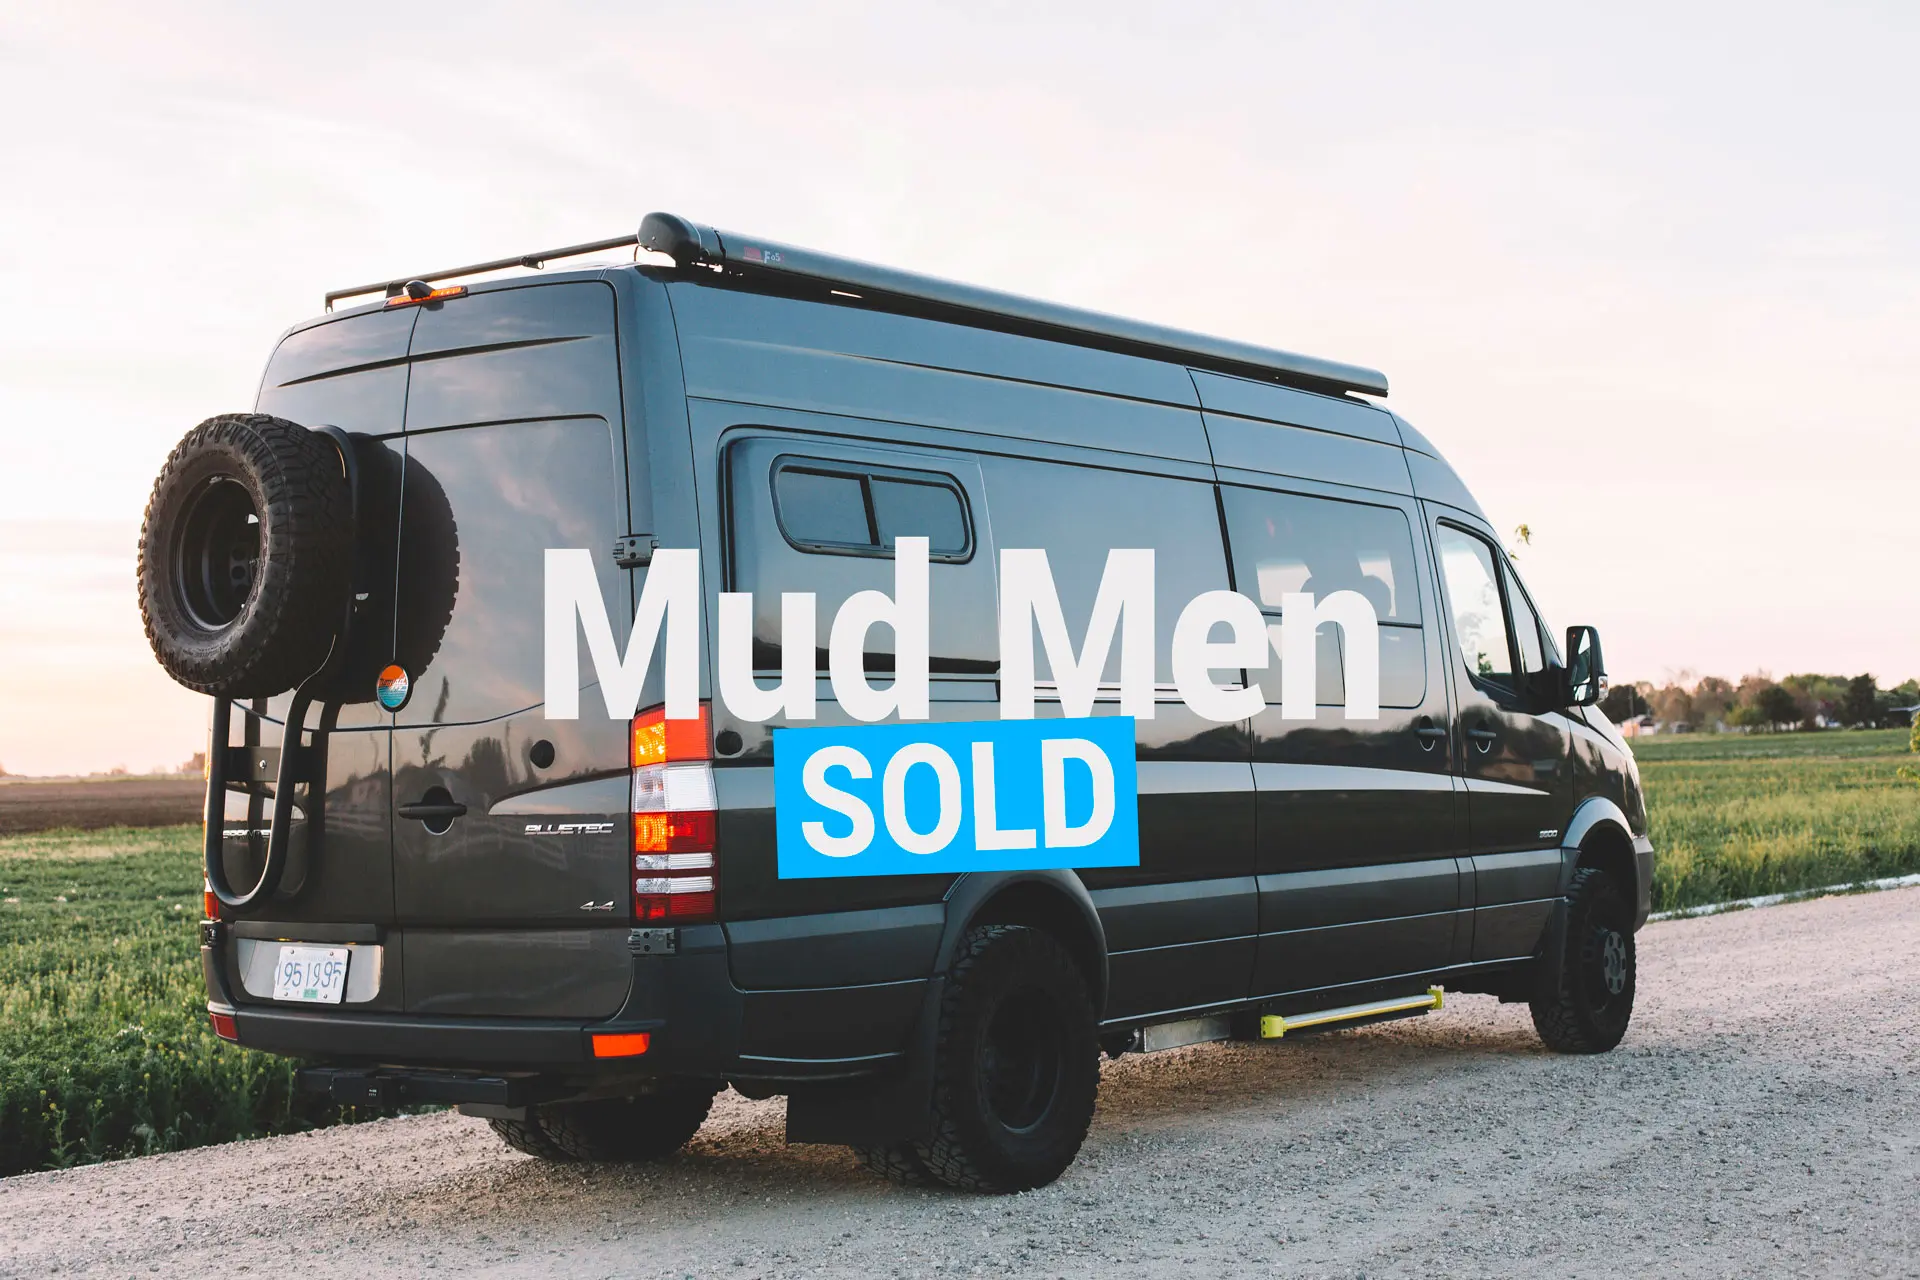 Mudmen 170 WB High Roof 4x4 3500 Premium Conversion by Nomad Vanz